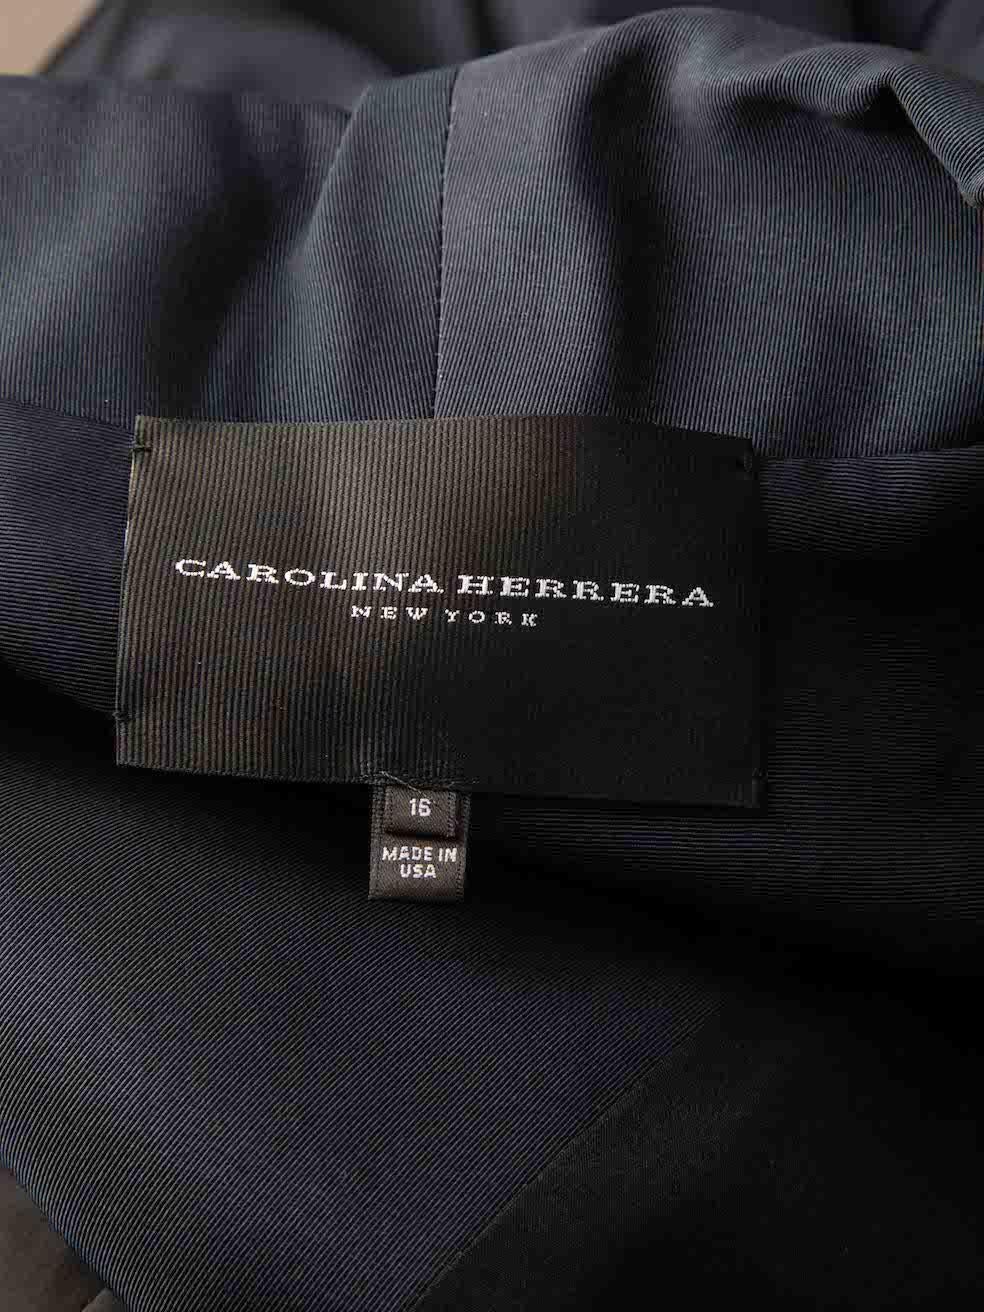 Women's Carolina Herrera Navy Gathered Accent Jacket Size 4XL